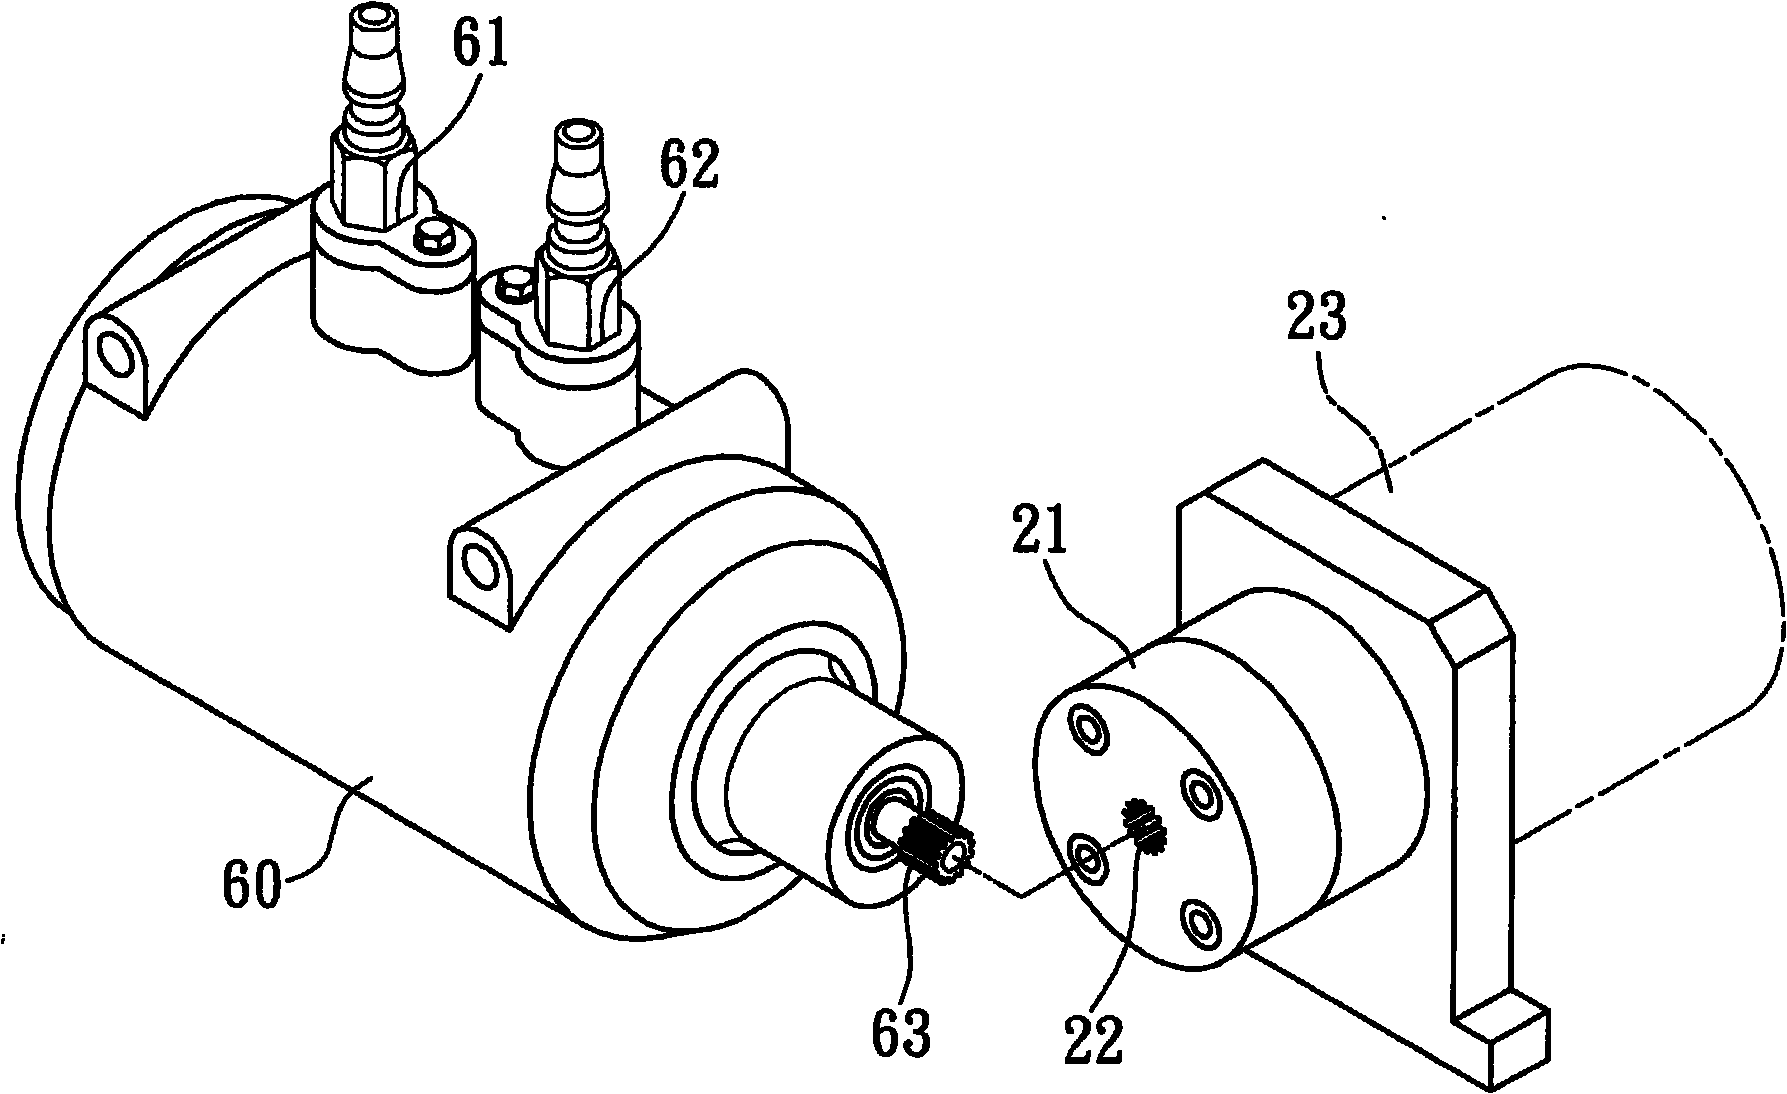 Pressure measuring unit of compressor